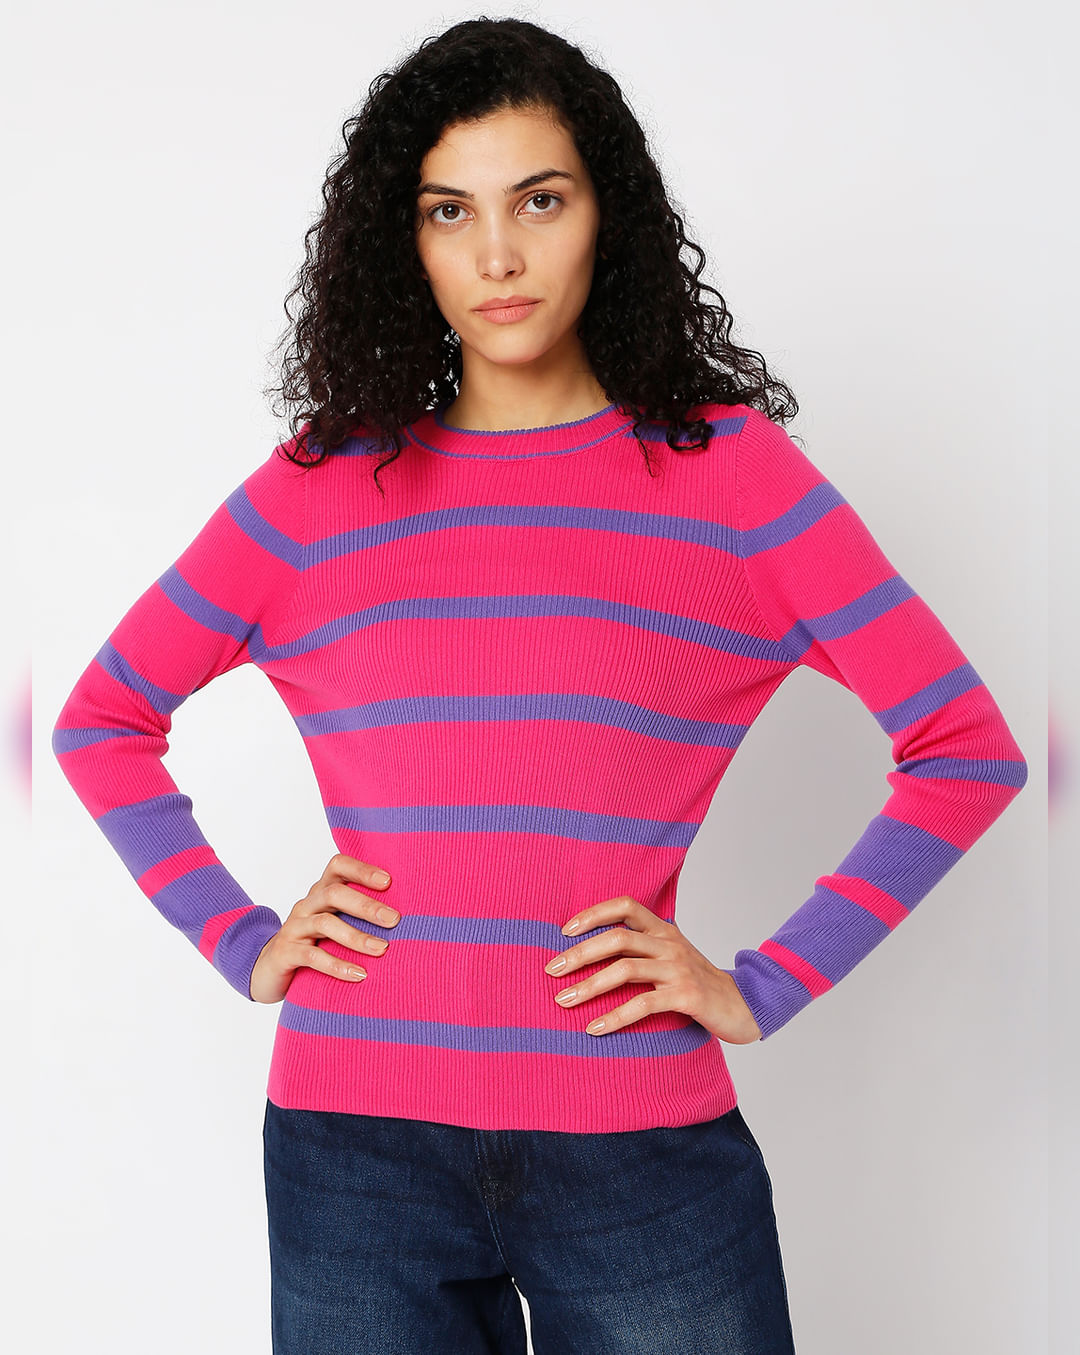 Buy Purple Striped Fitted Sweater Women Online India | VeroModa